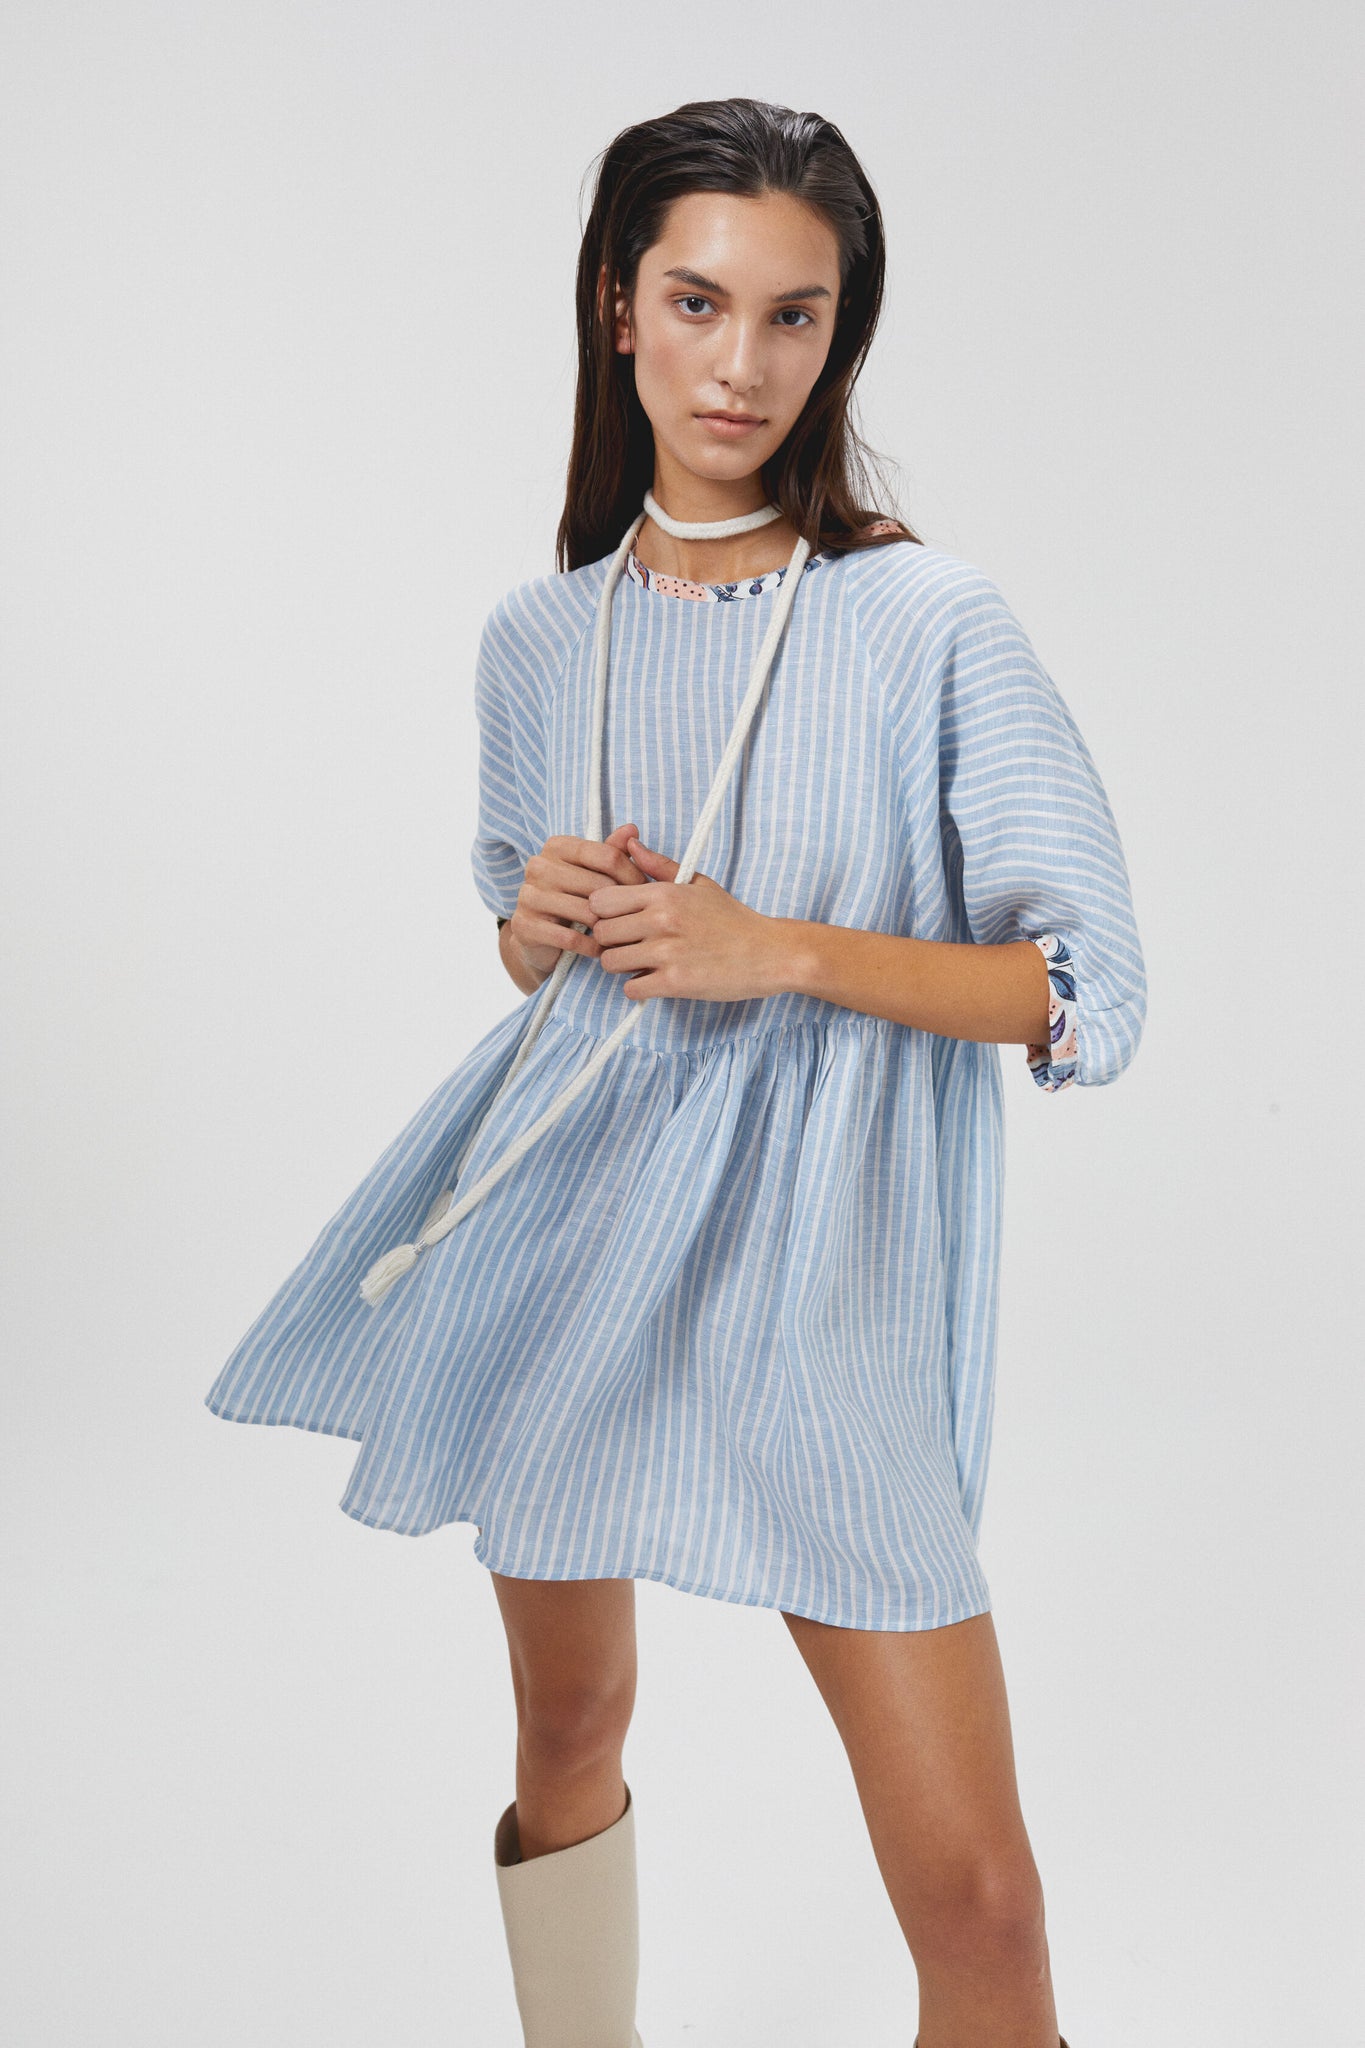 Alcala Linen Dress - Light Blue and White Stripes